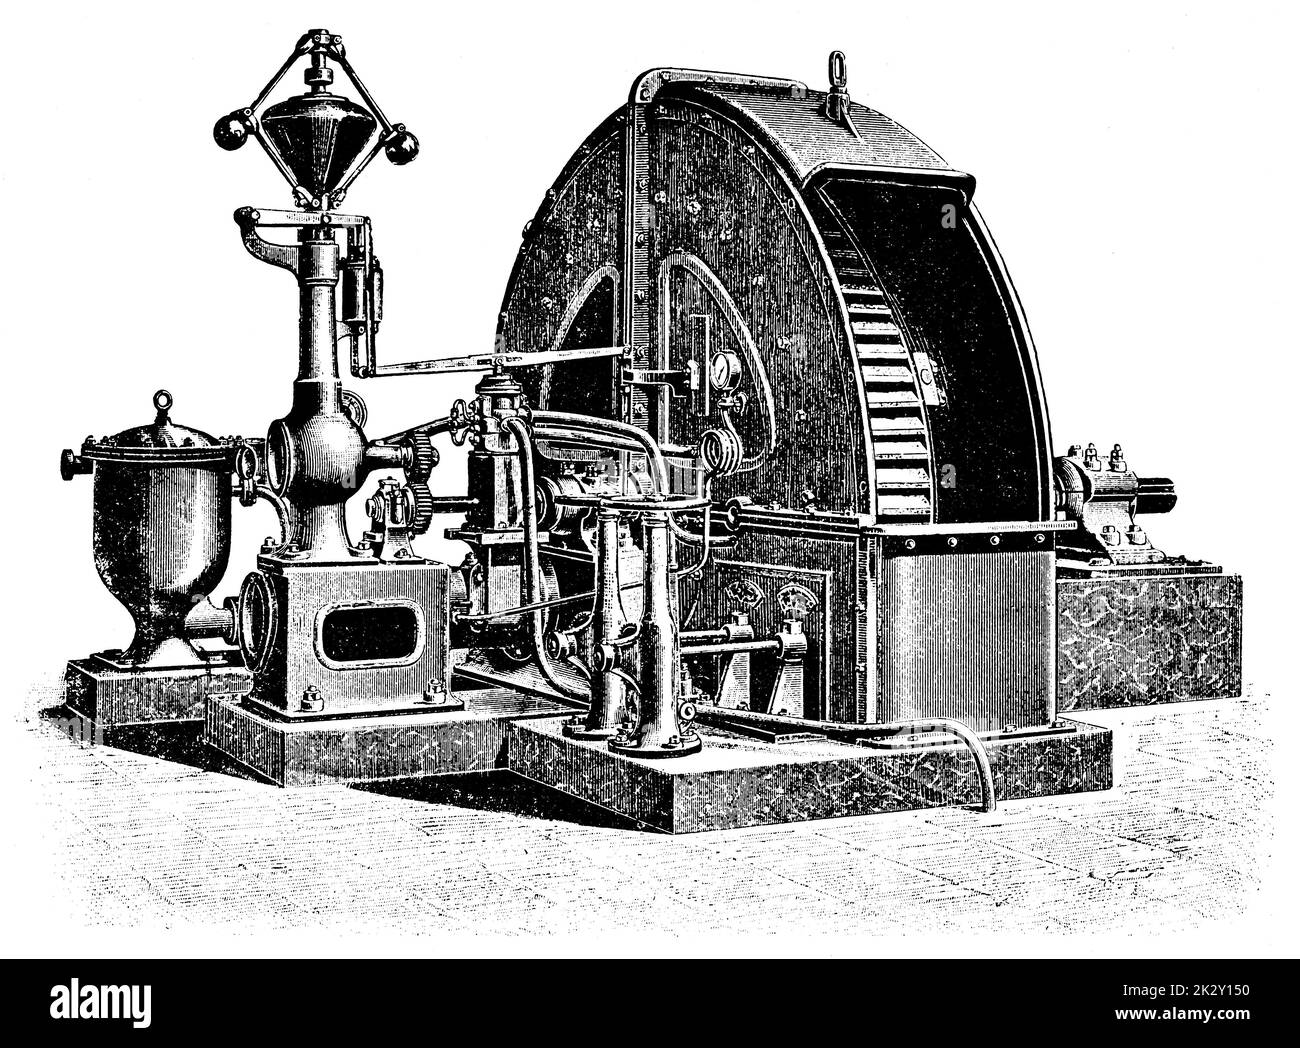 Archivo:Turbina hidraúlica.jpg - Wikipedia, la enciclopedia libre